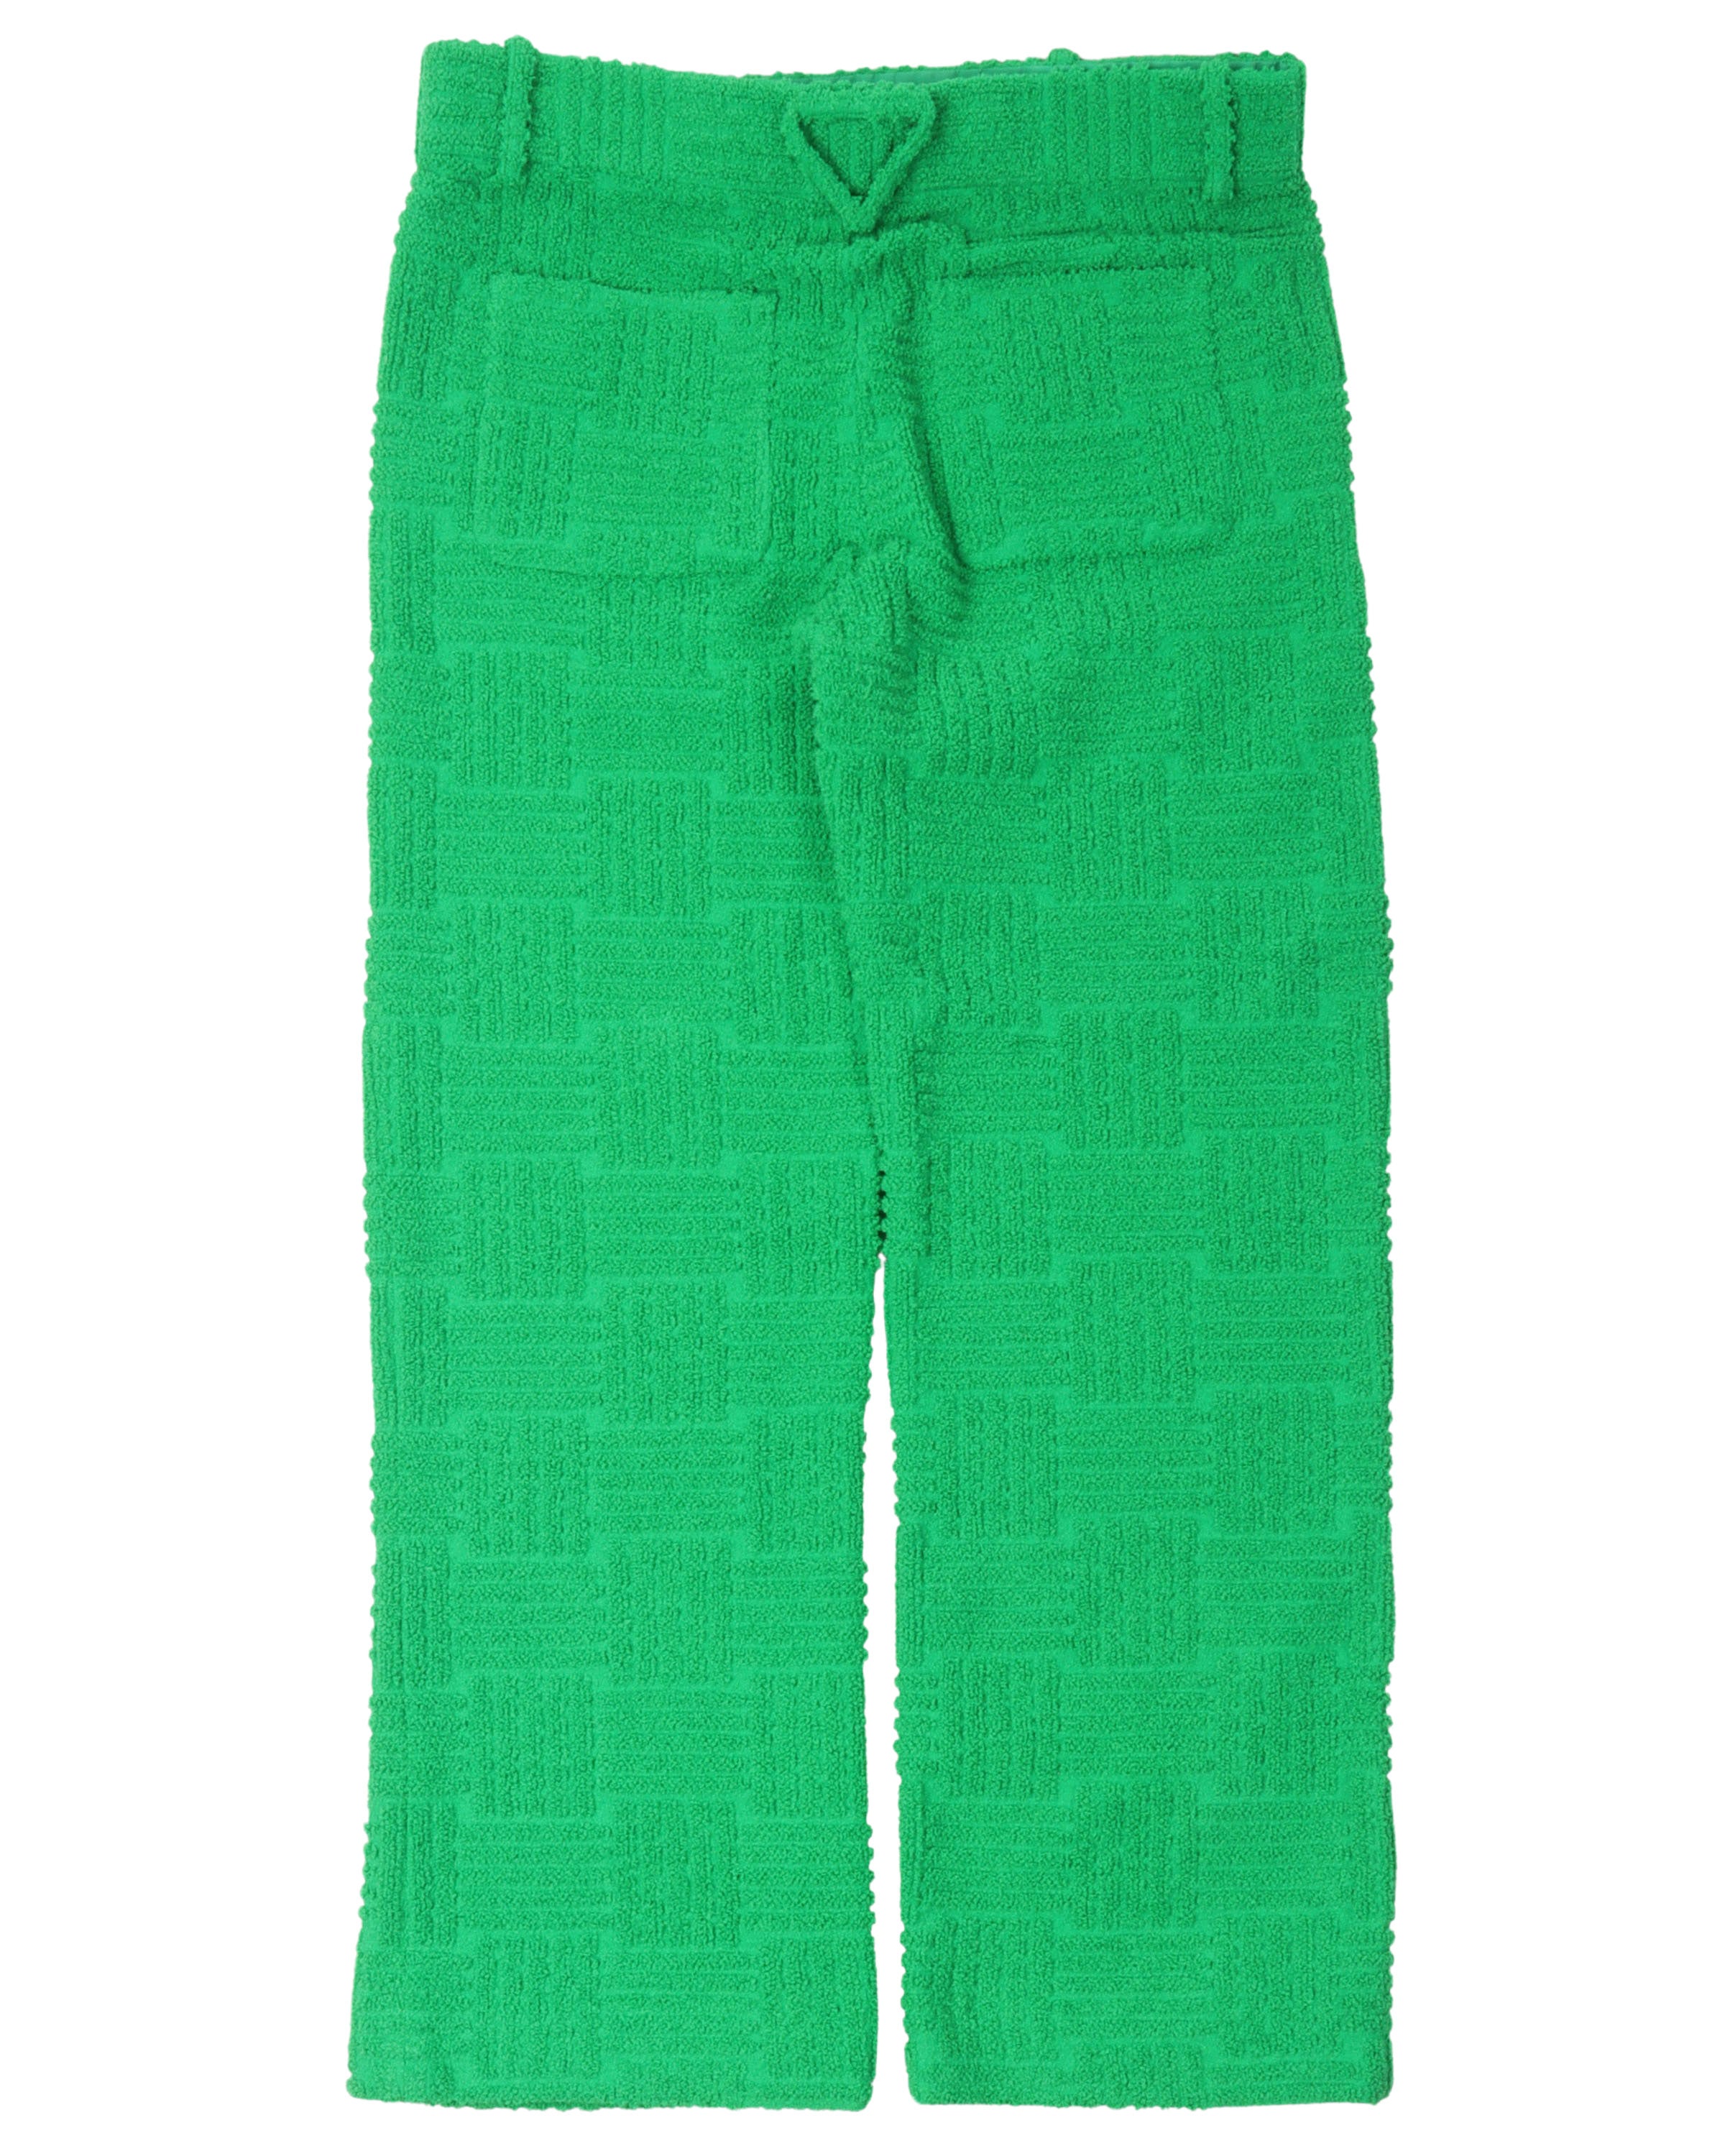 Jacquard Terry Cloth Pants